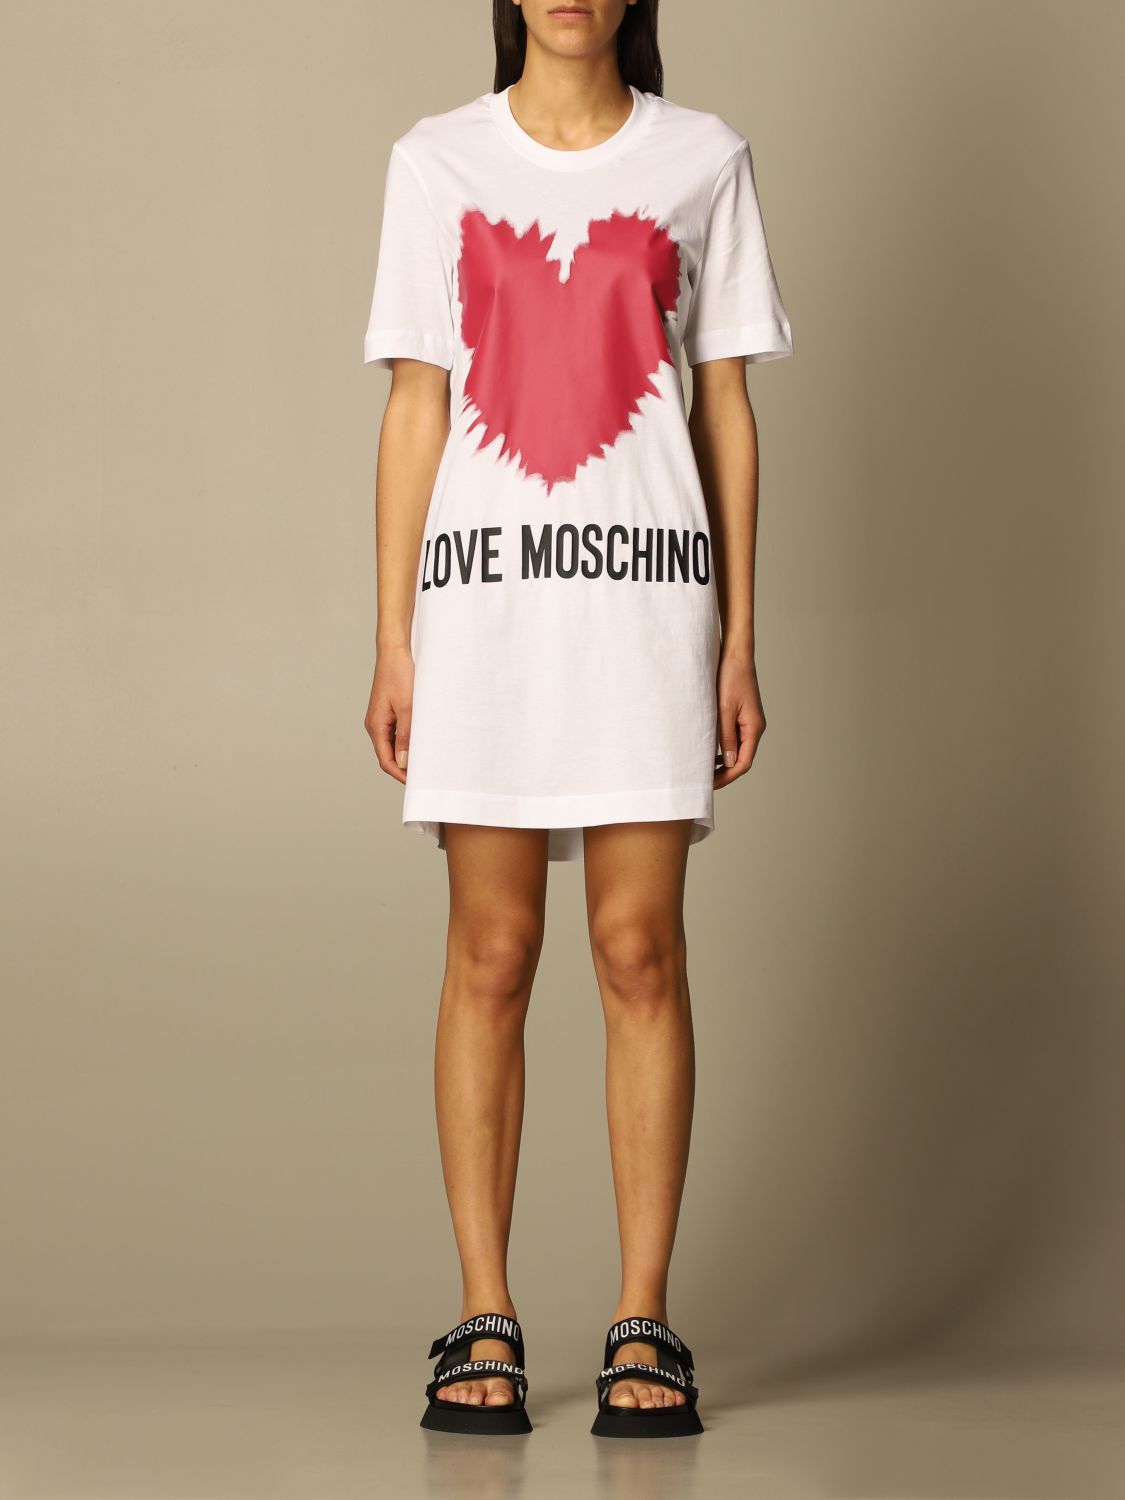 LOVE MOSCHINO: short dress with big heart | Dress Love Moschino Women ...